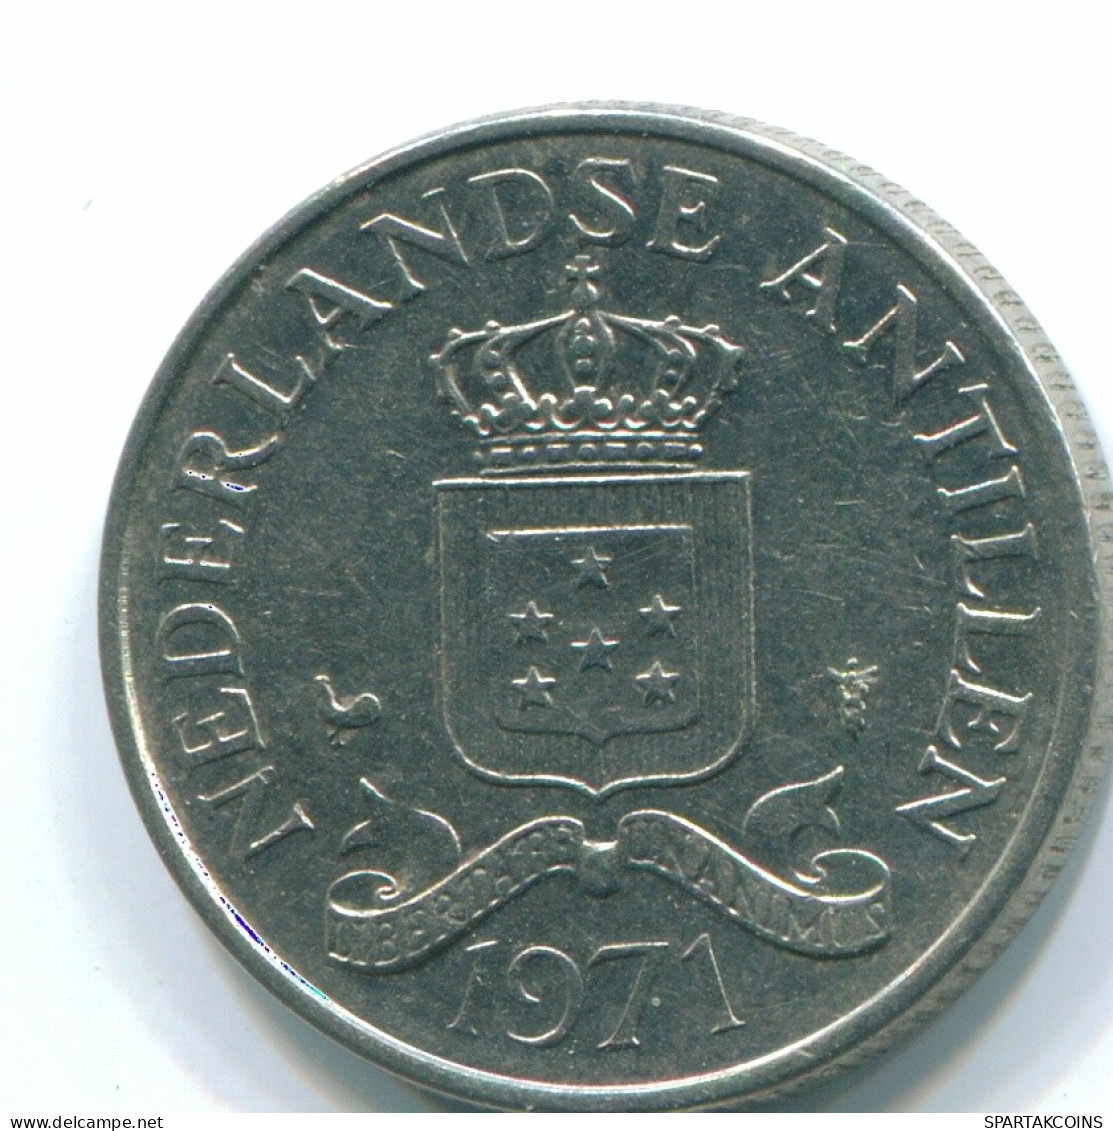 25 CENTS 1971 NETHERLANDS ANTILLES Nickel Colonial Coin #S11580.U.A - Nederlandse Antillen